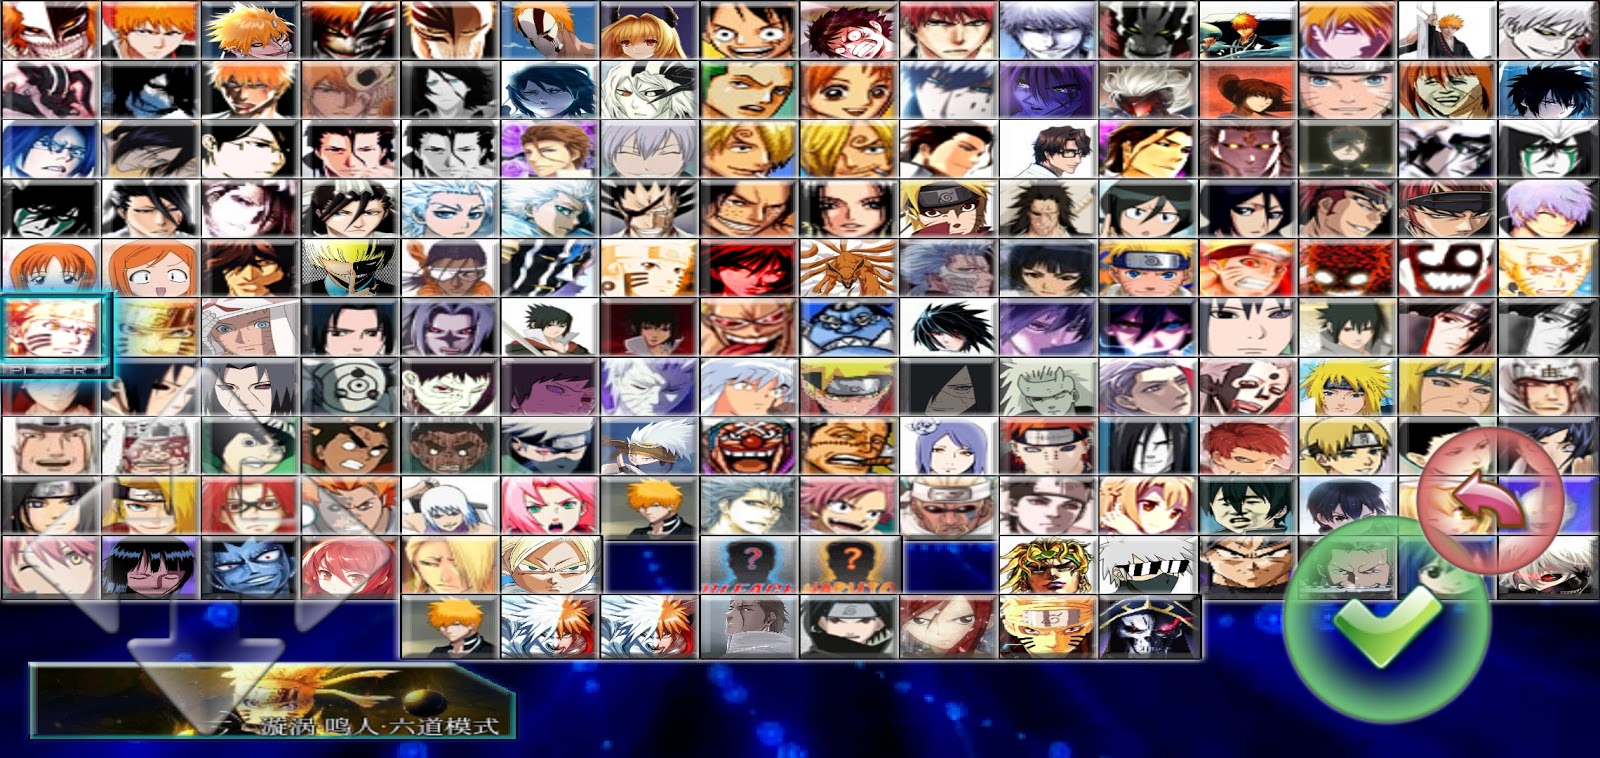 Anime Mugen v1.2.5 Apk Android Bleach VS Naruto 340+ Personajes.